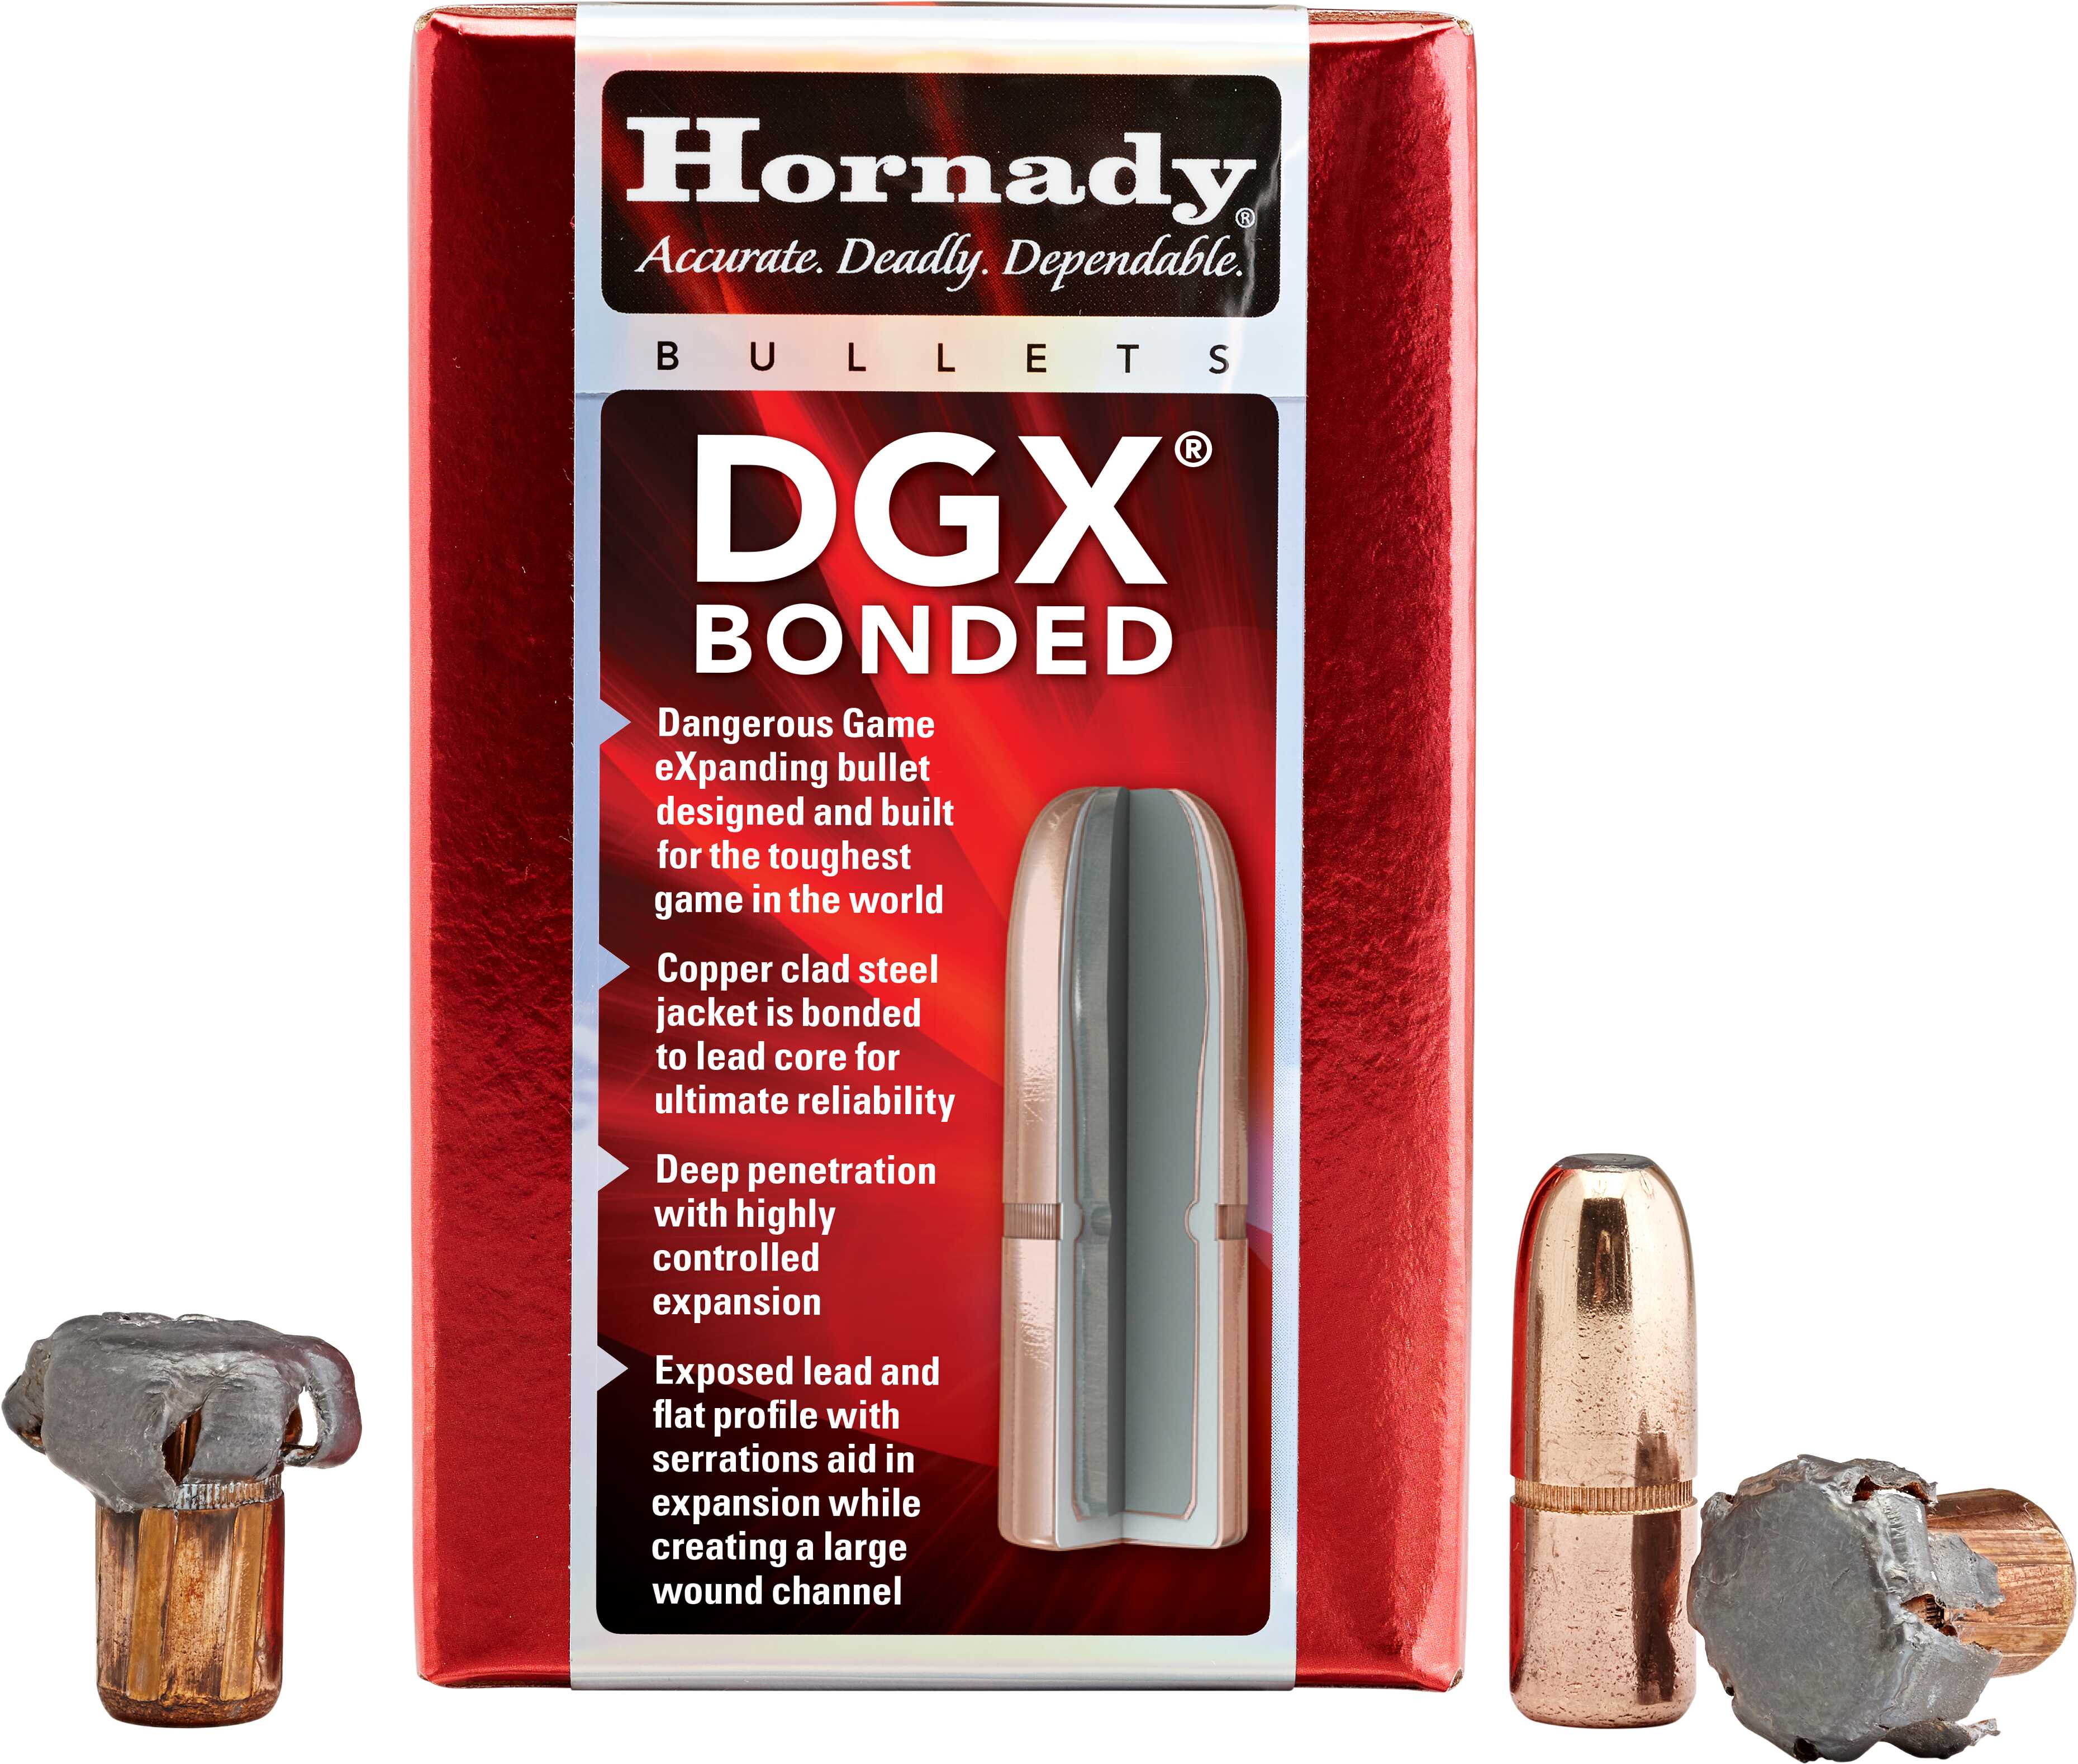 Hornady 5050 DGX Bonded Caliber .505 525 GR Box